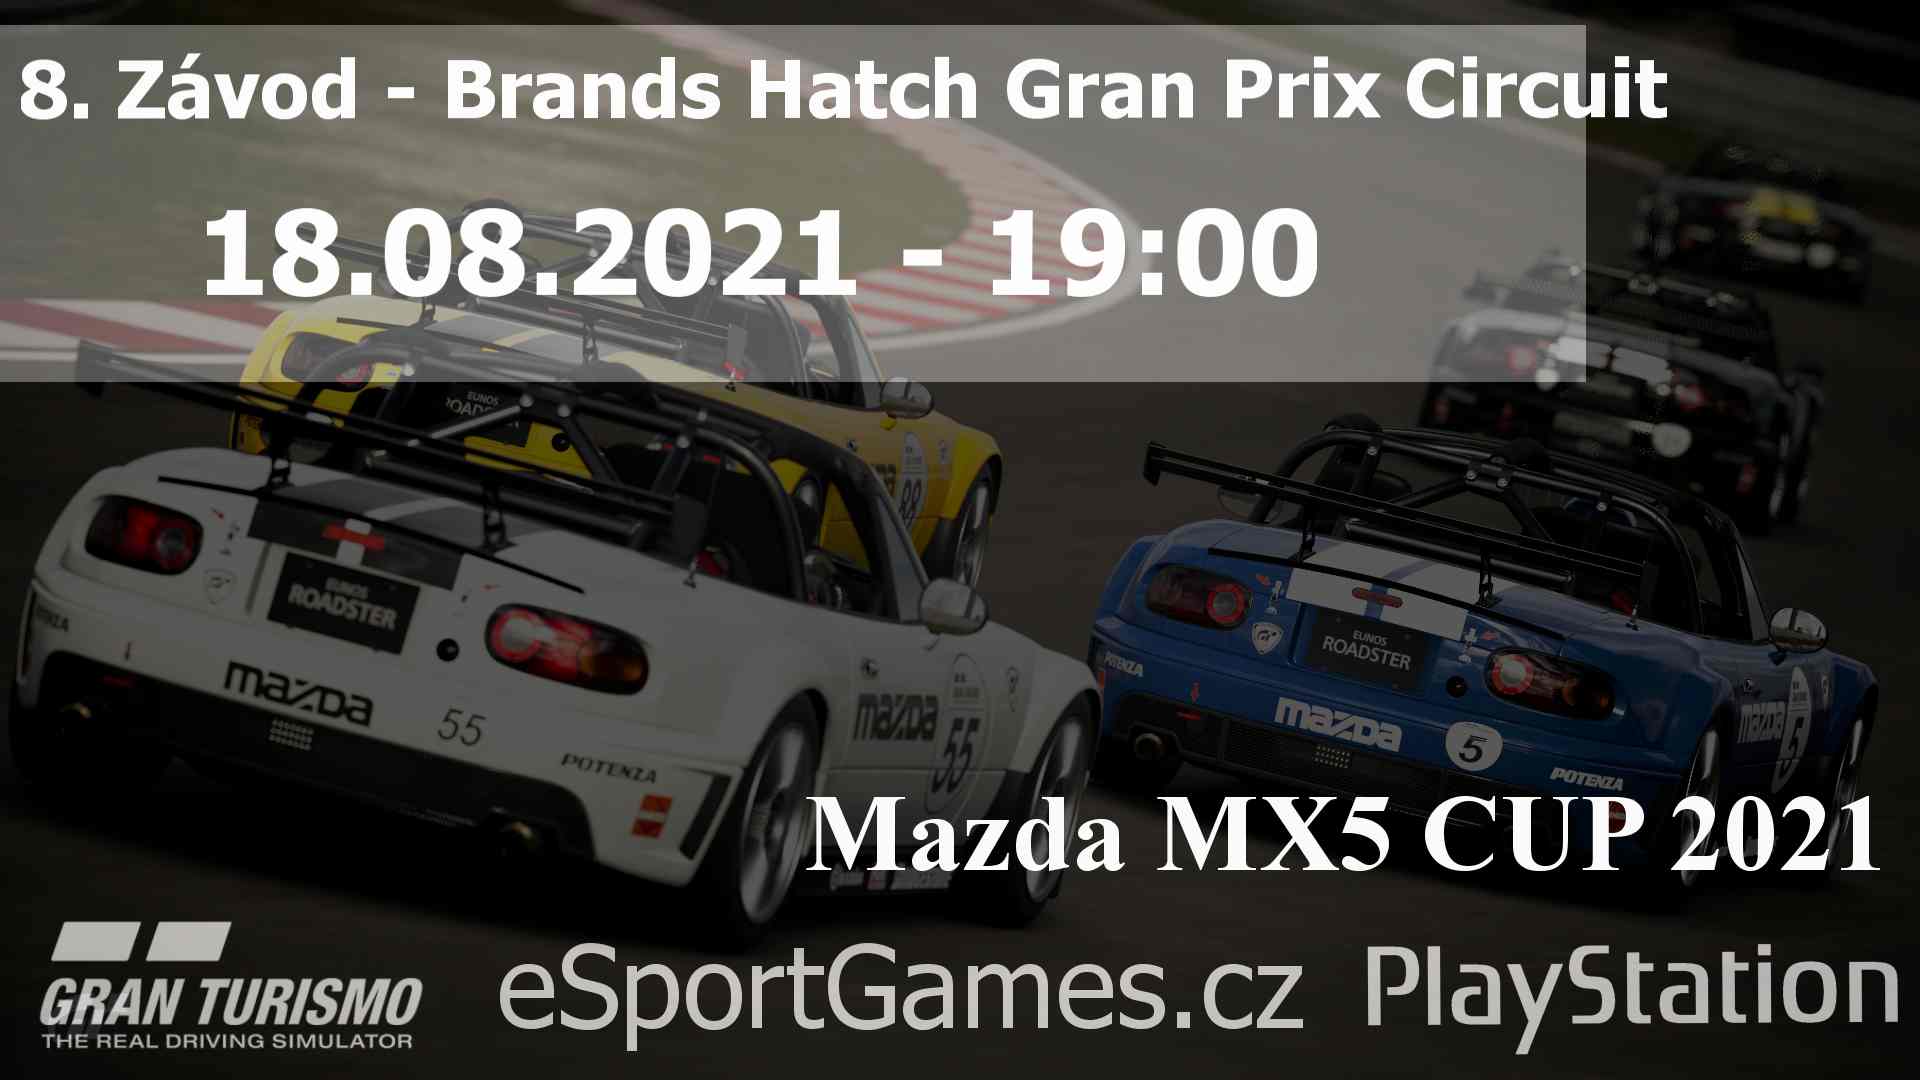 8. Závod - MX5 CUP 2021 - Brands Hatch Gran Prix Circuit